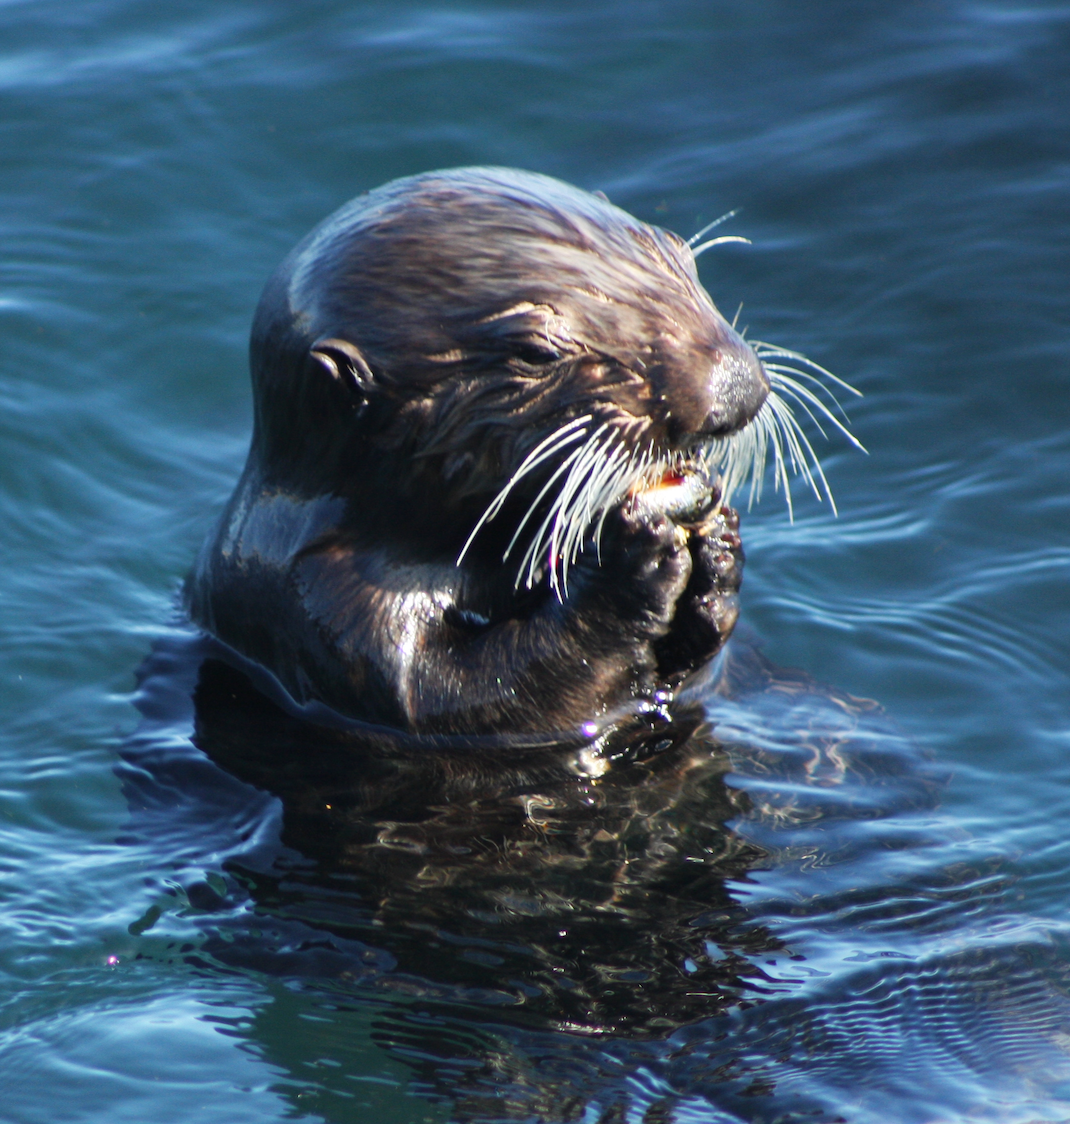 Sea otters play role in protecting salt marsh habitat